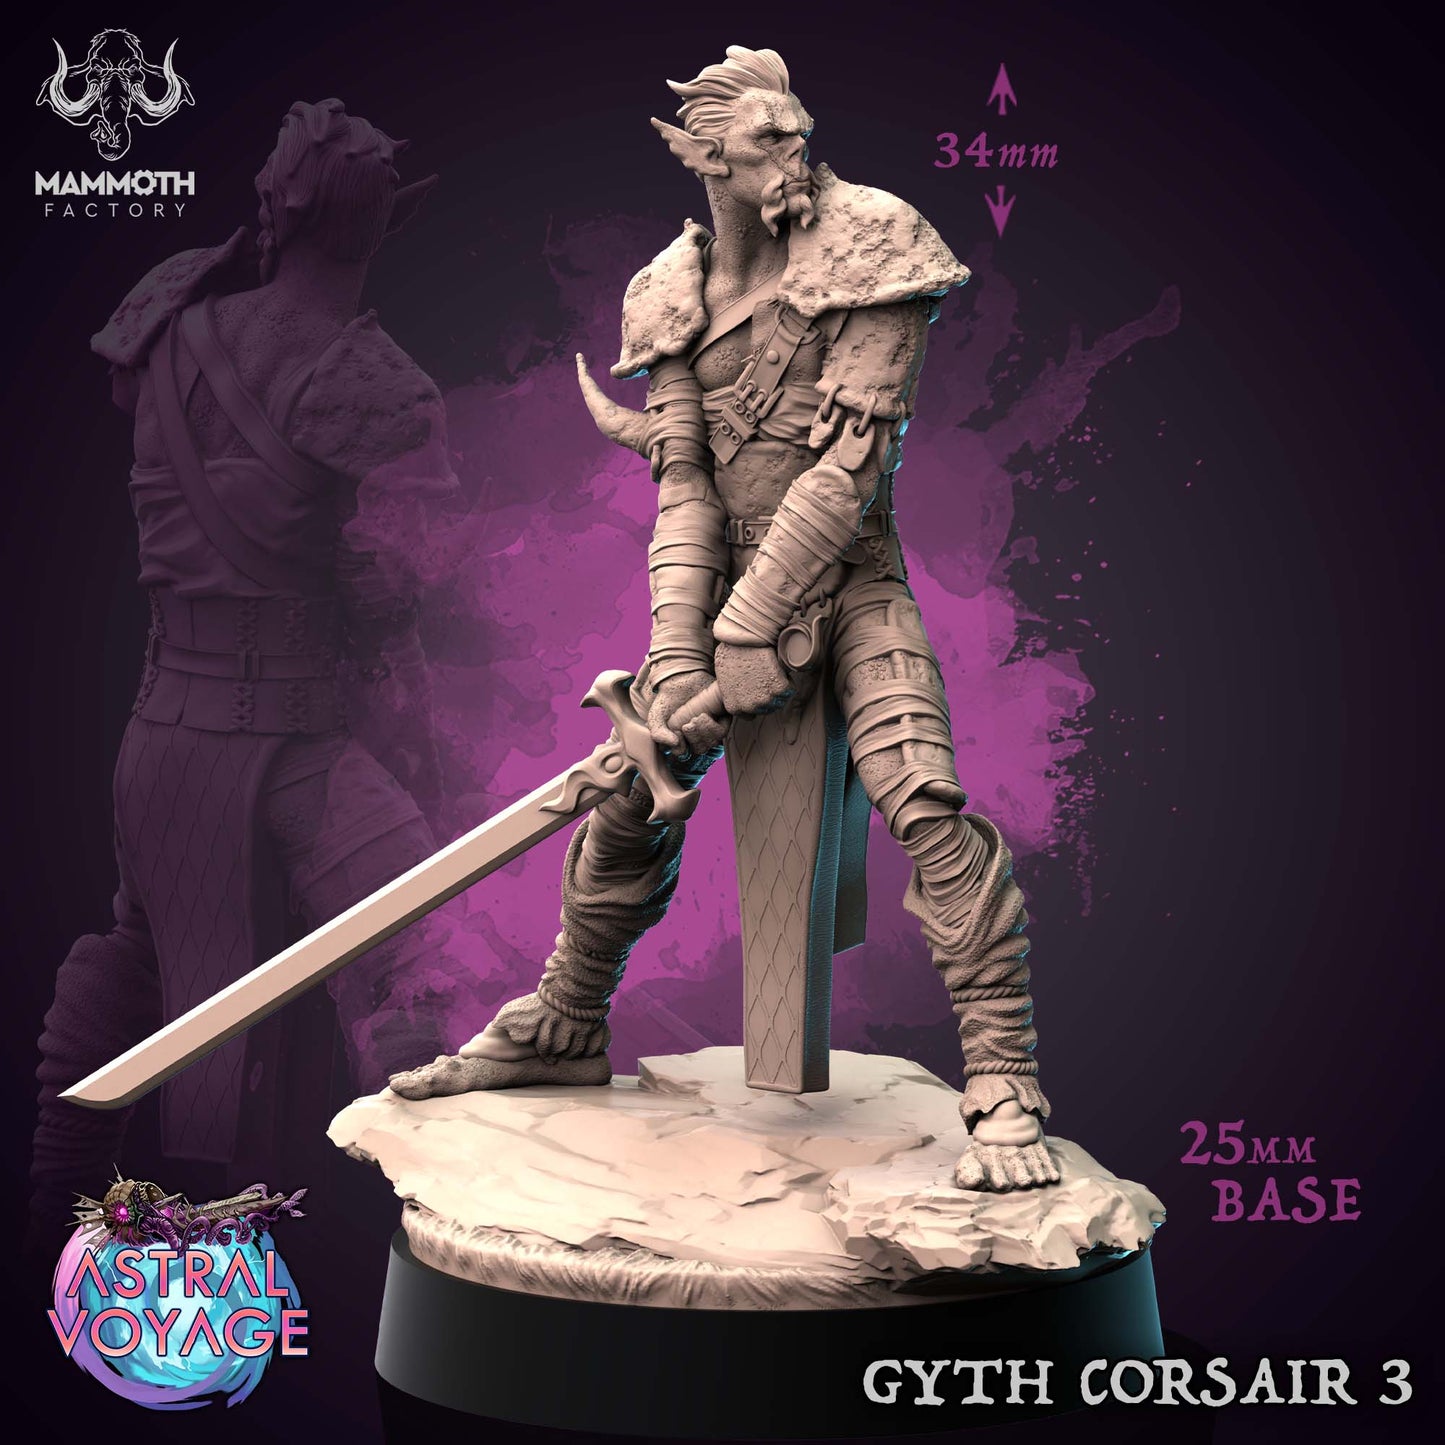 Gyth Corsair 3